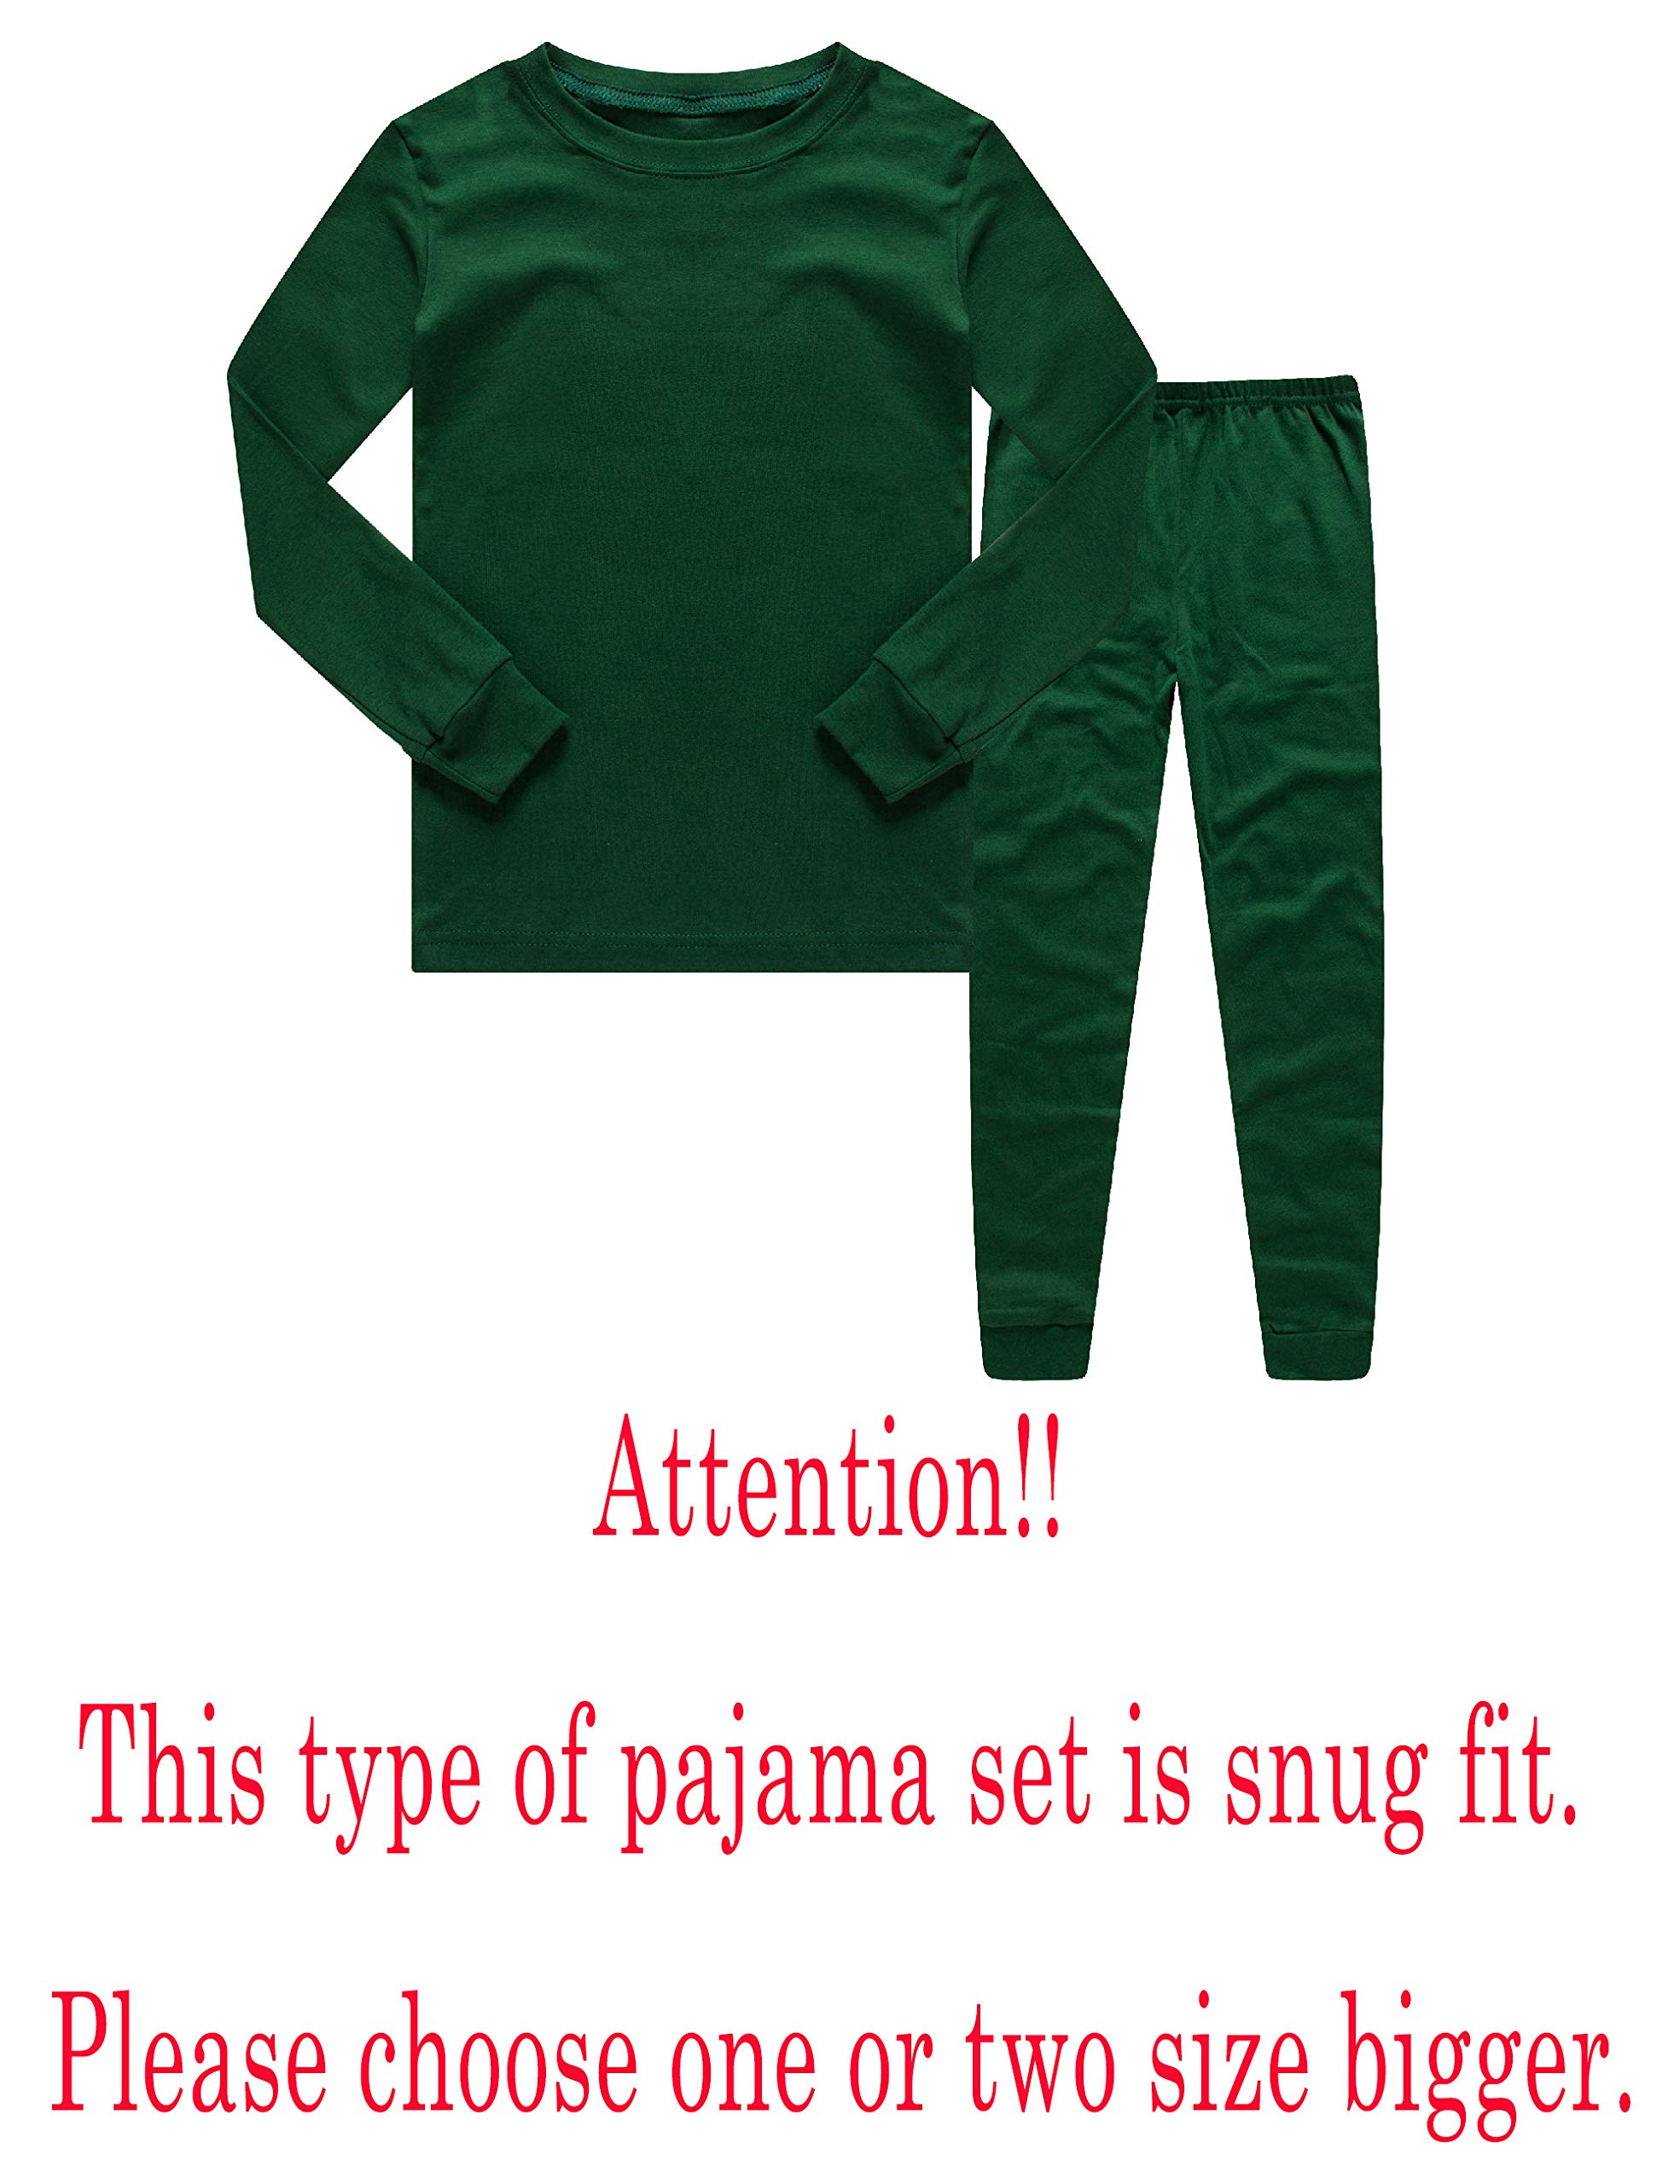 Family Feeling Dinosaur Little Boys Kids Pajamas Sets 100% Cotton Long sleeve Pjs